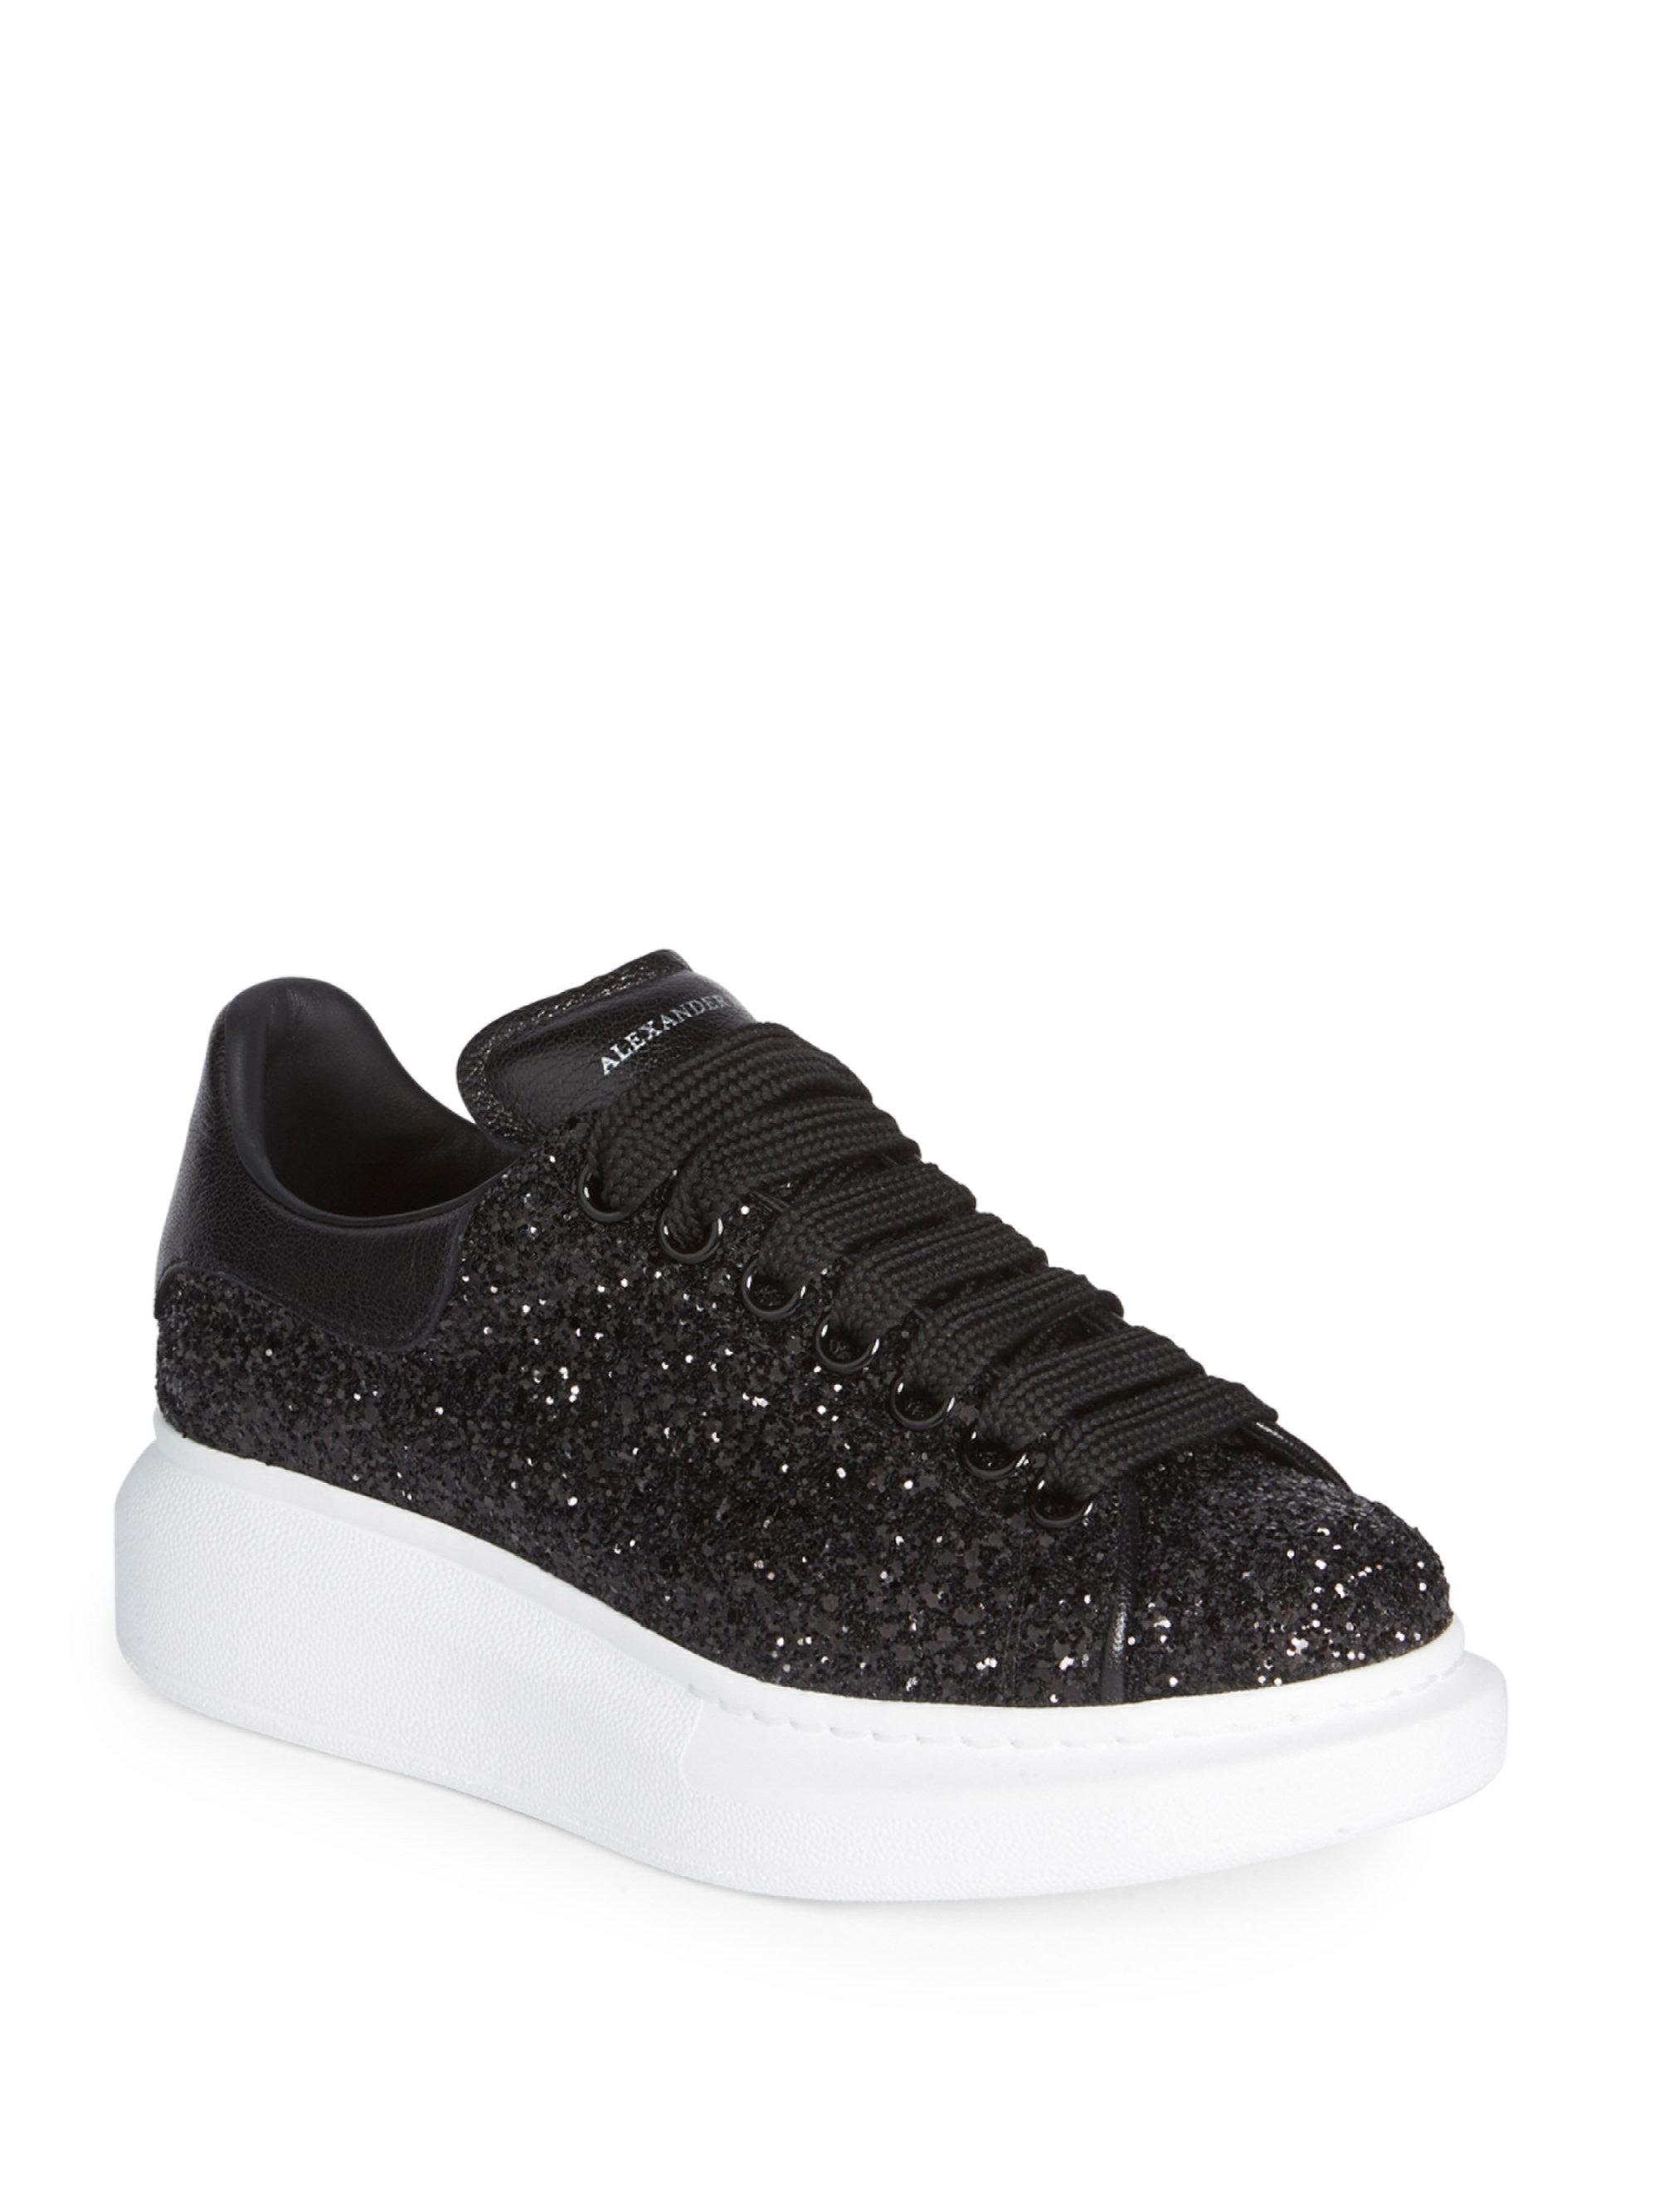 Lyst - Alexander mcqueen Glitter Platform Sneakers in Black